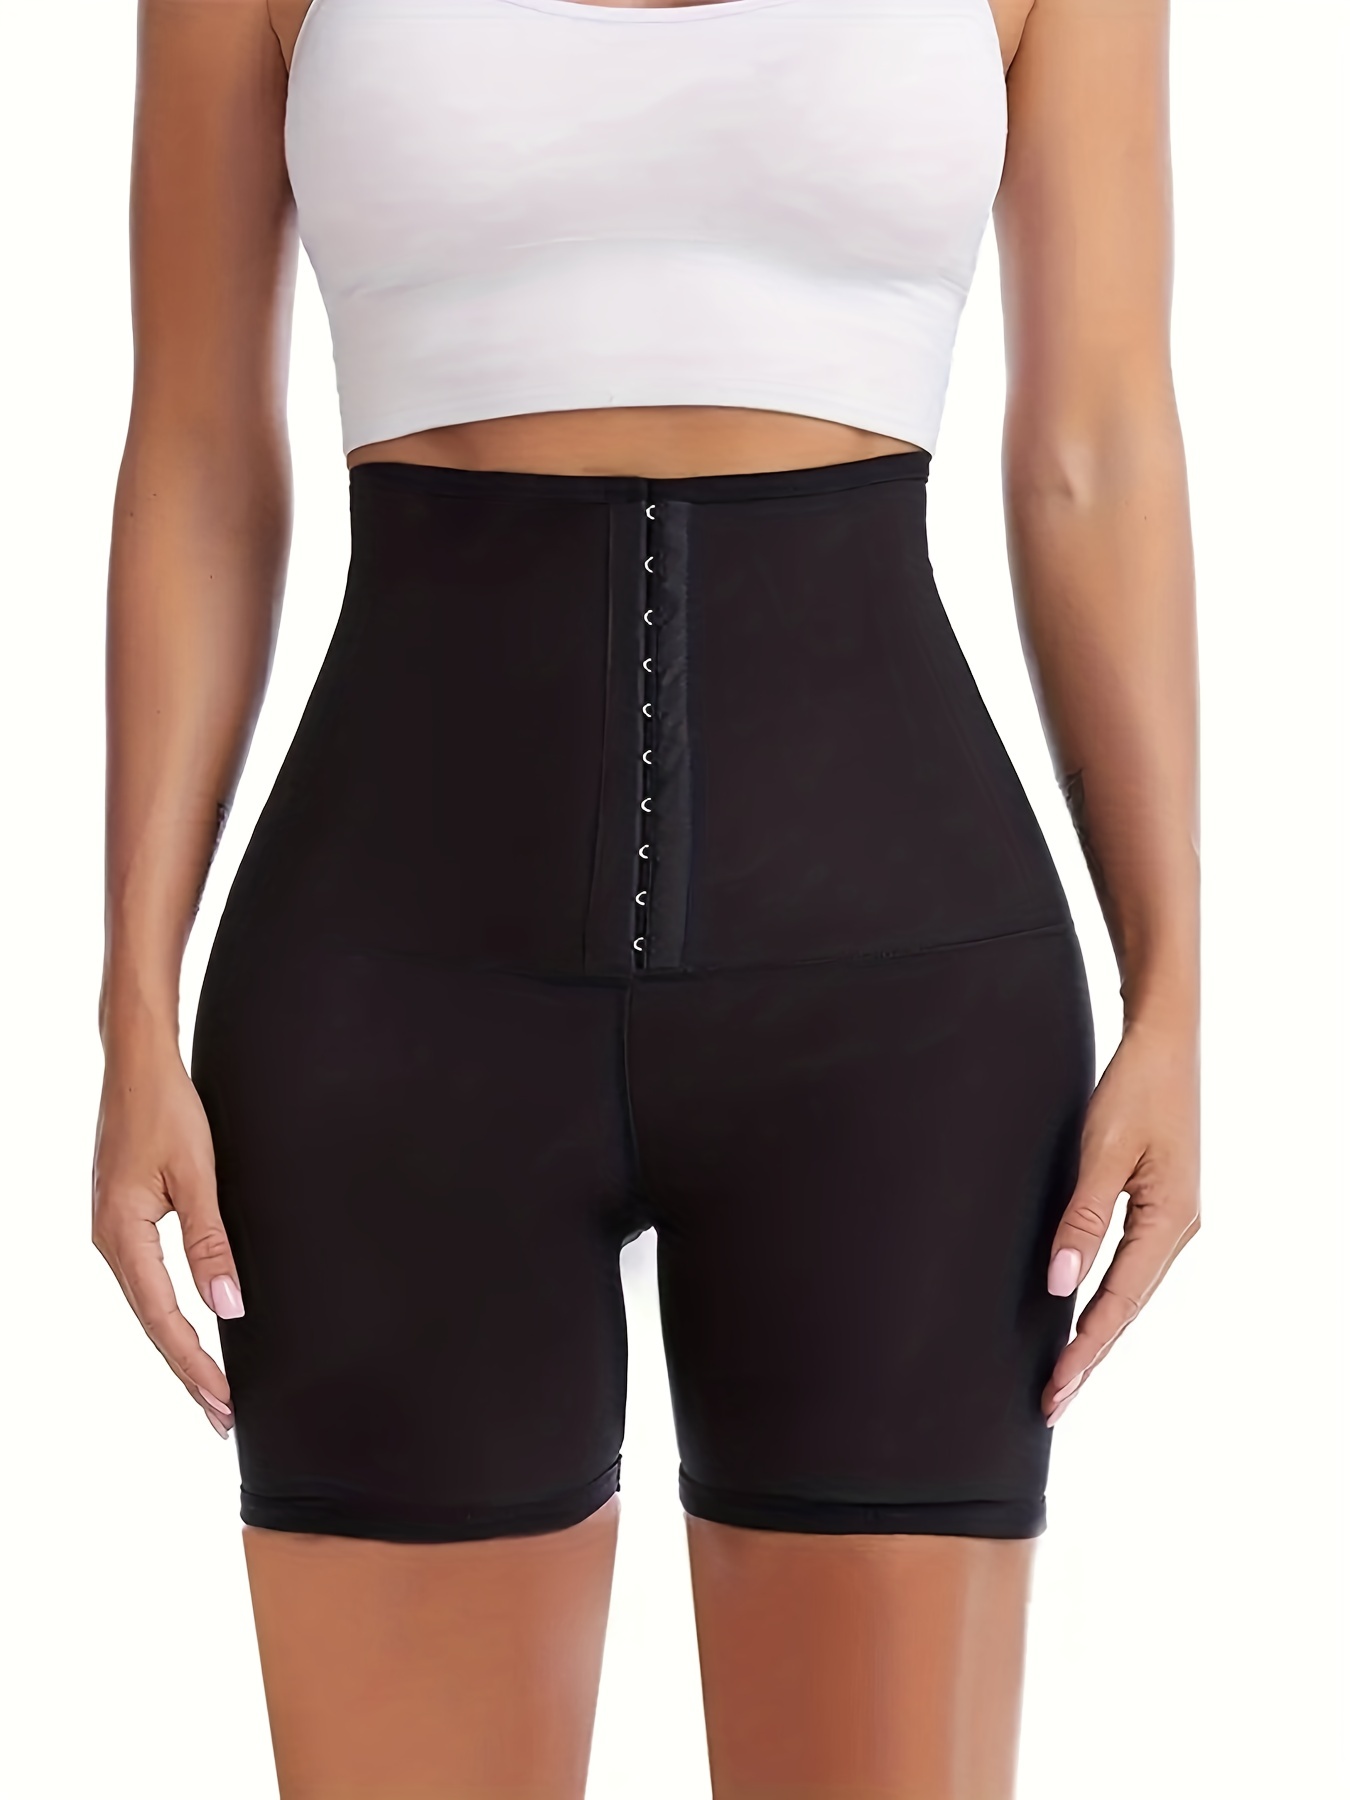 High Waist Tummy Control Sweat Shorts For Women - Butt Lifting And  Shapewear Pants